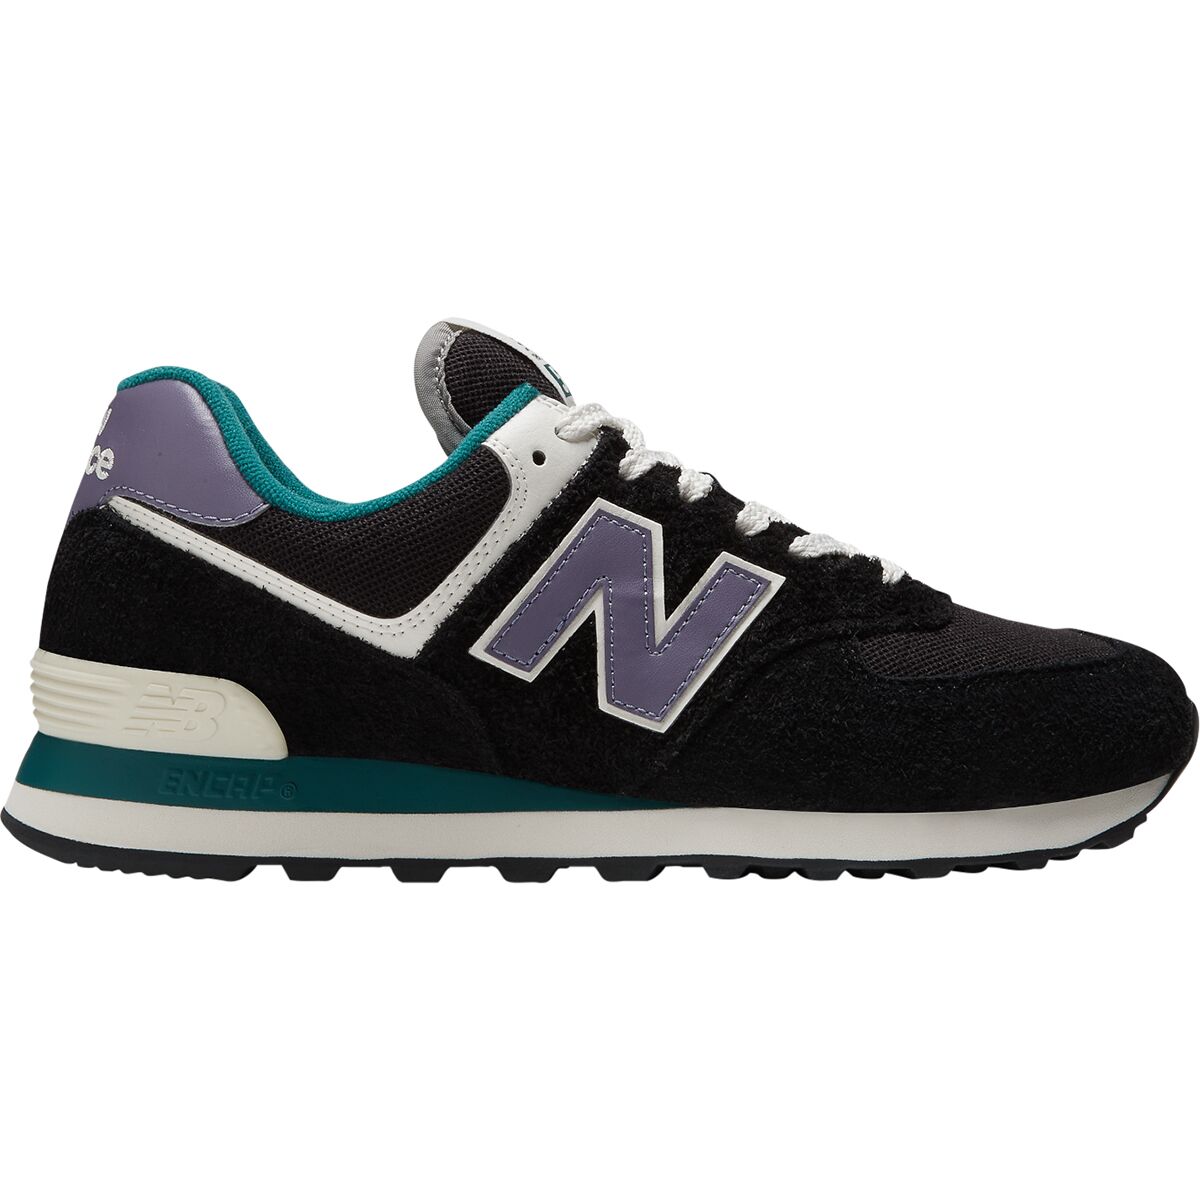 New Balance 574 Neo Sole Shoe